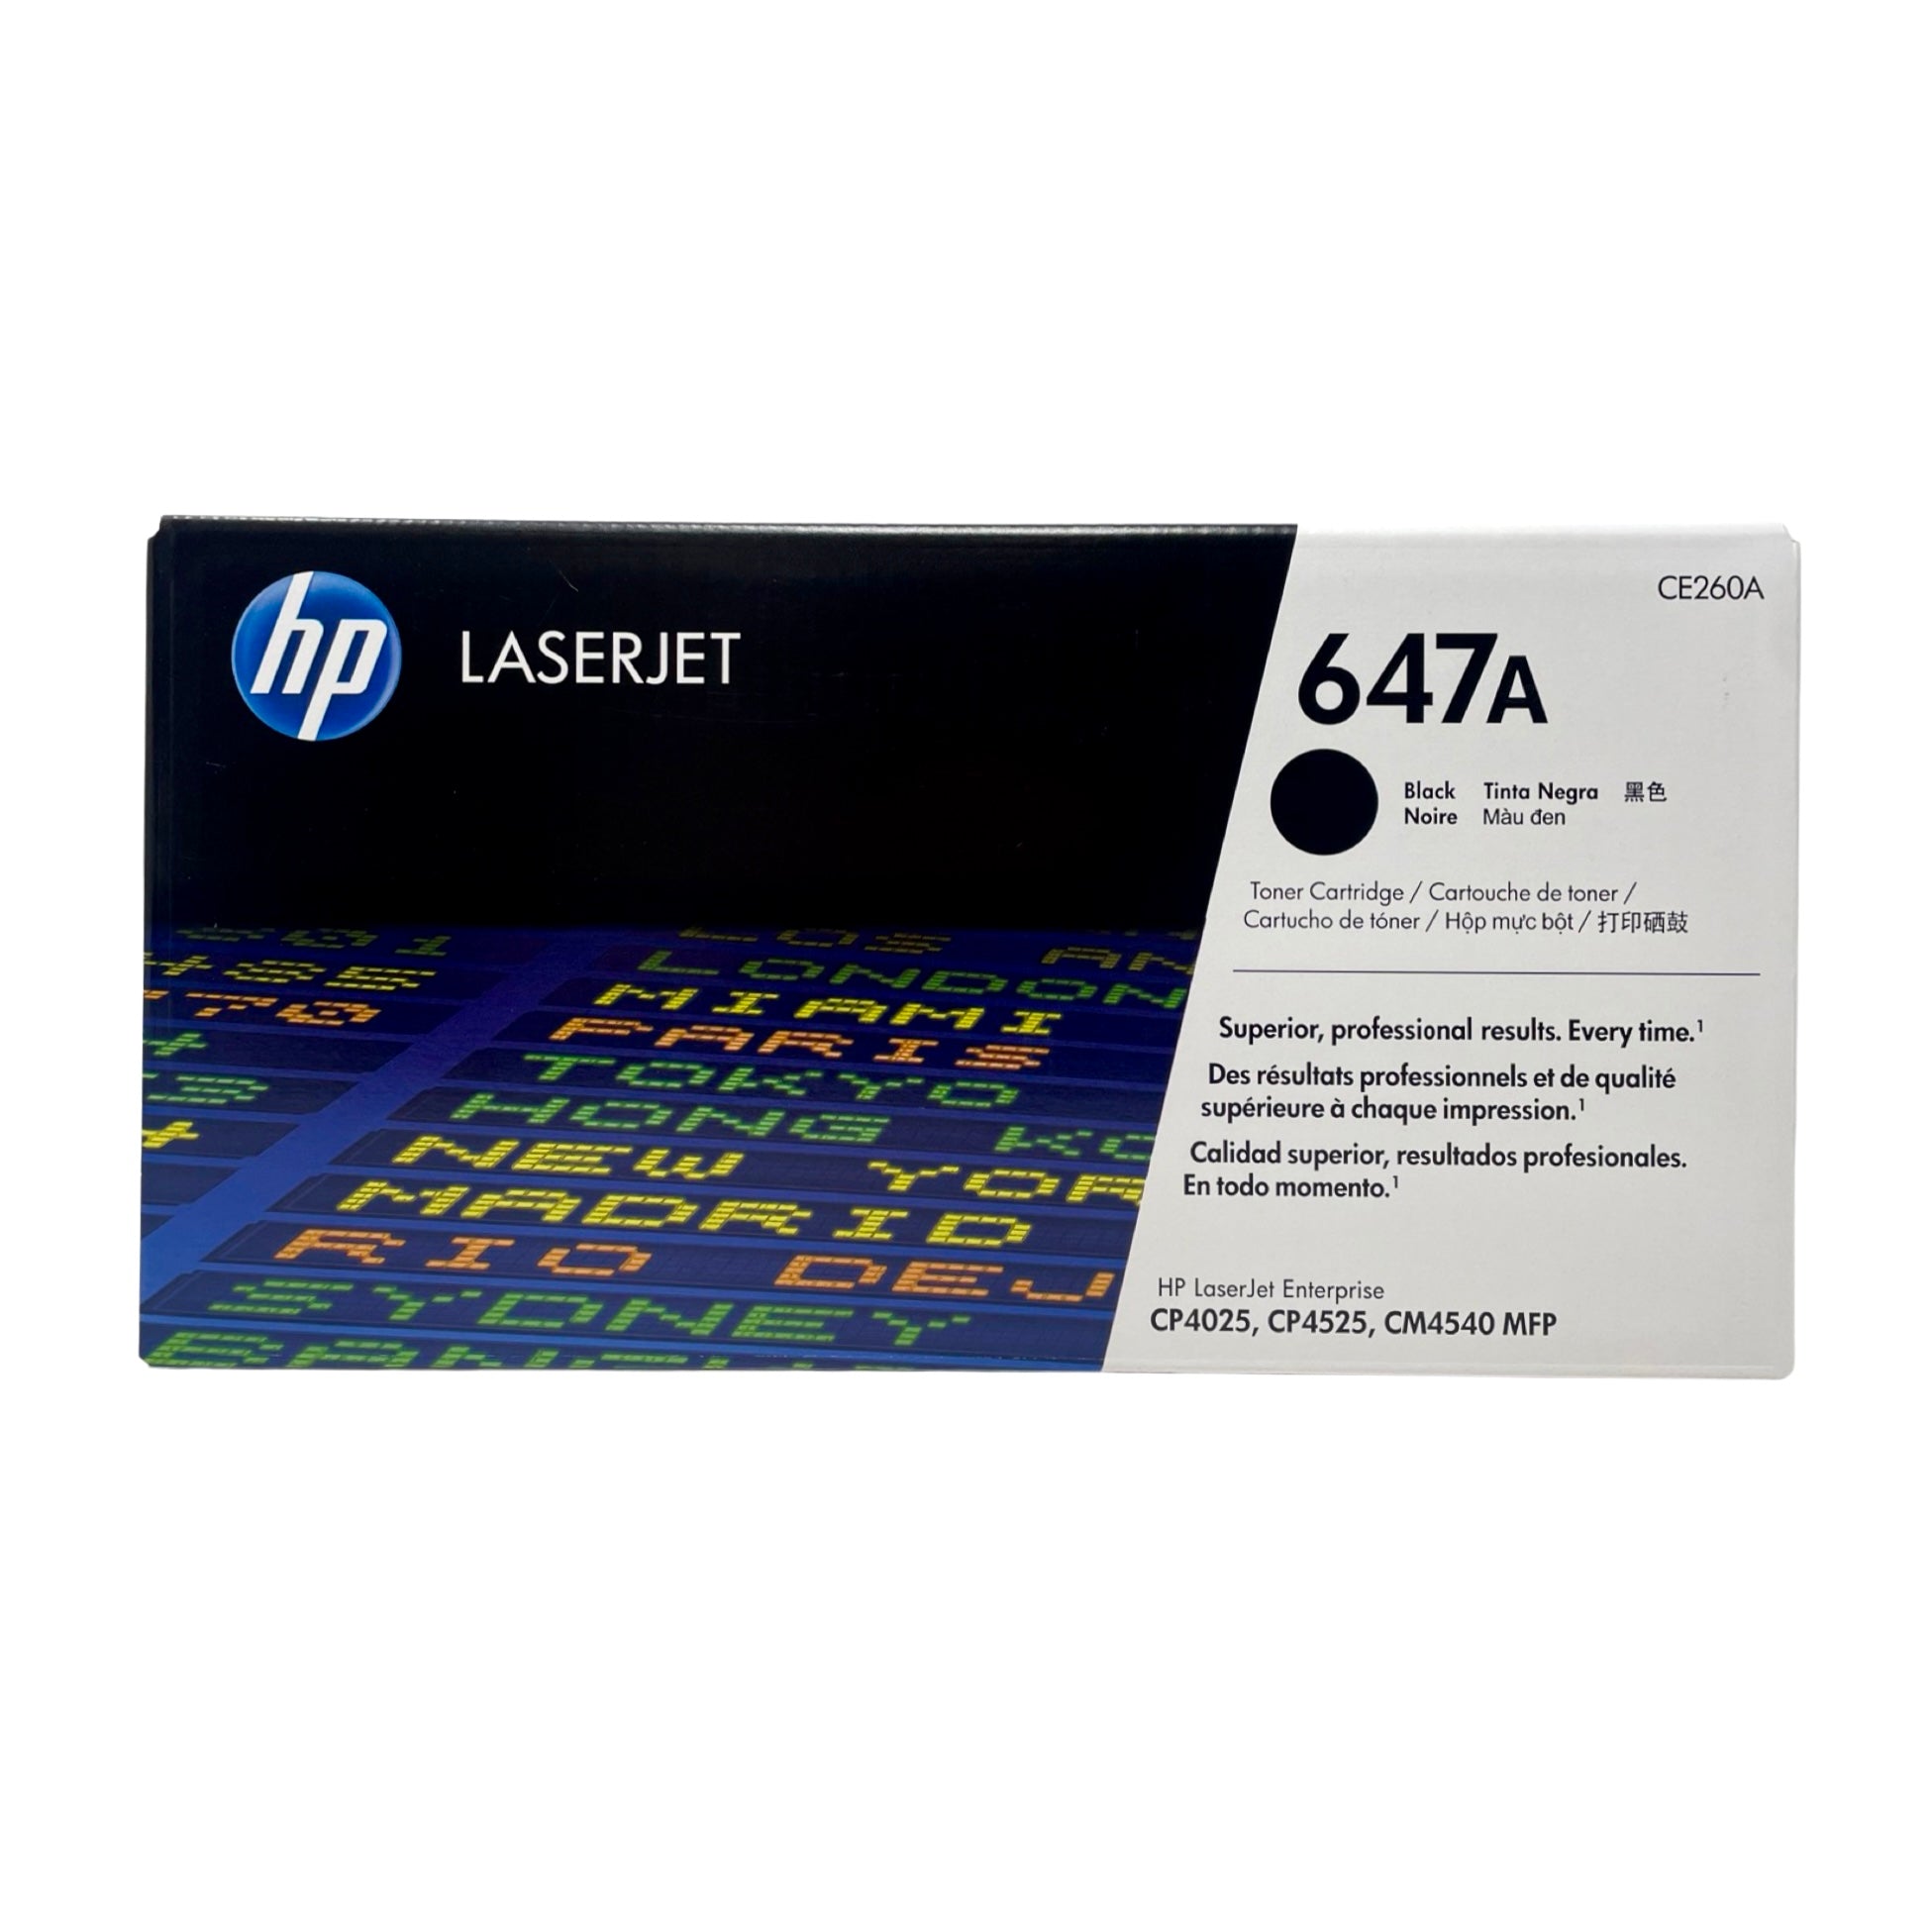 Genuine HP 647A Black CE260A LaserJet Toner Cartridge